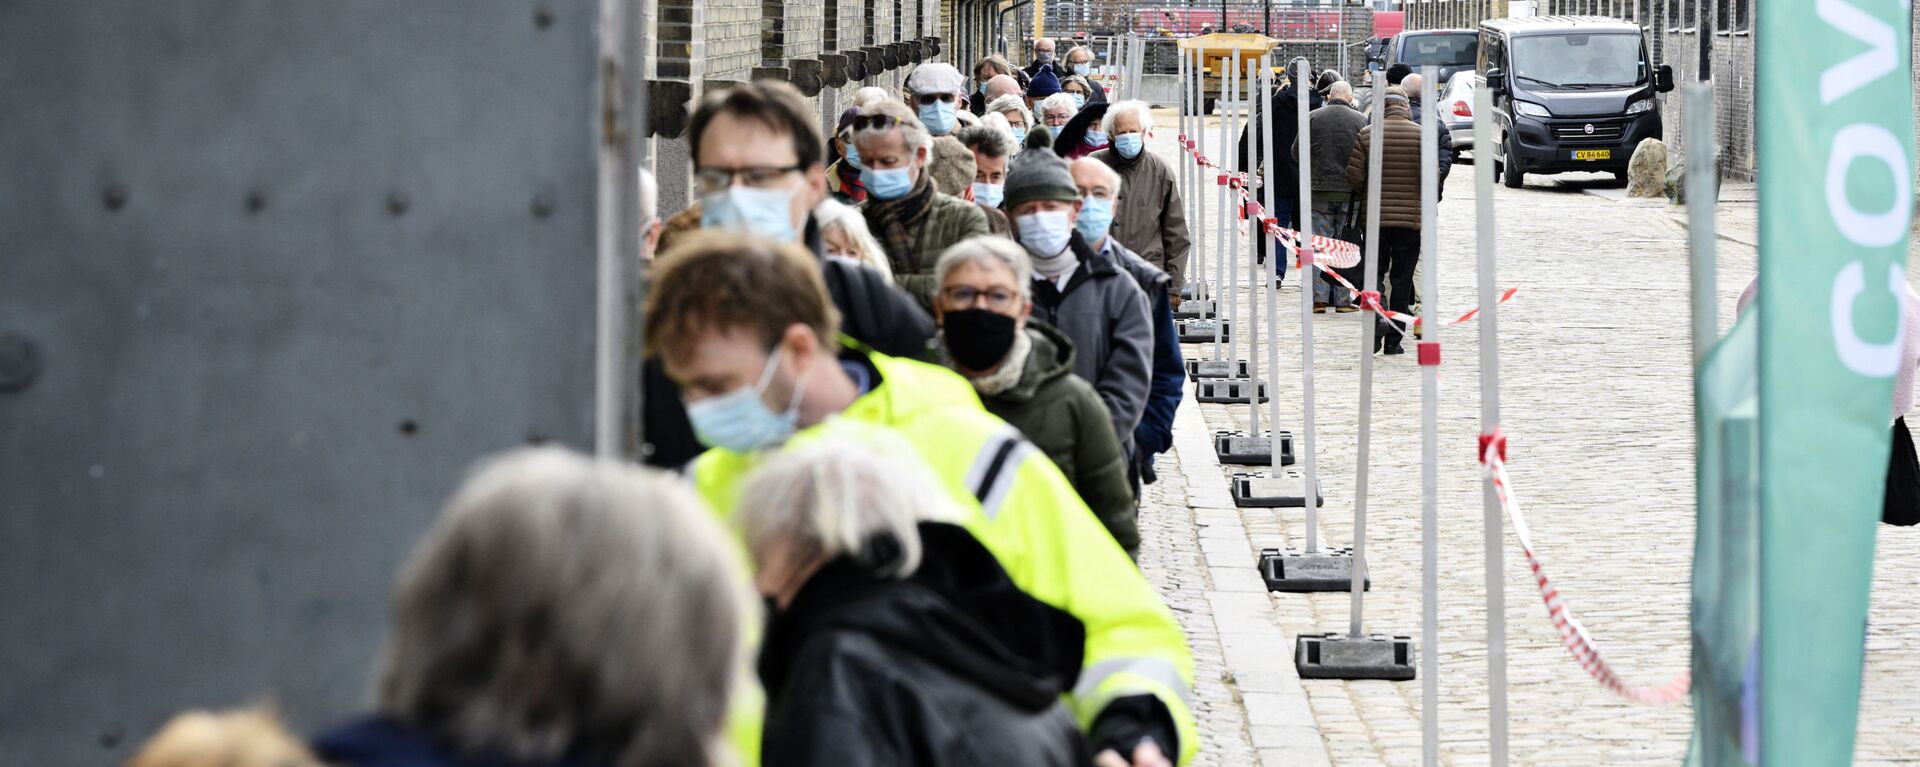 People queue outside the vaccination center in Oksnehallen in Copenhagen, Denmark, on April 12, 2021, during the ongoing coronavirus (Covid-19) pandemic.  - Sputnik International, 1920, 25.01.2022